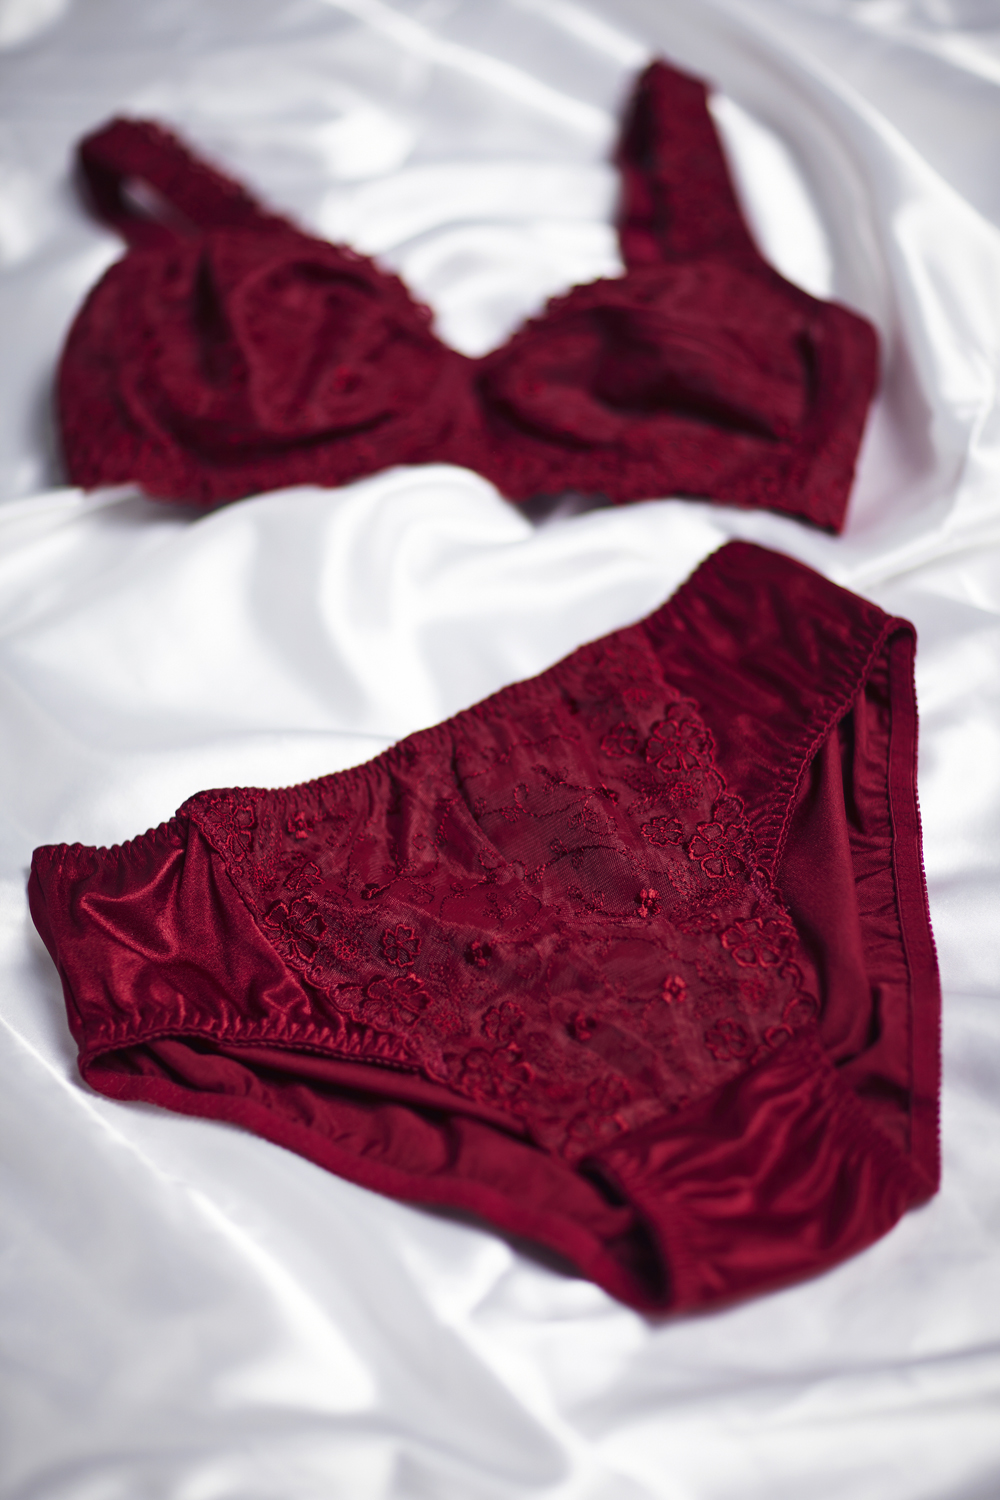 matching red bra and panties